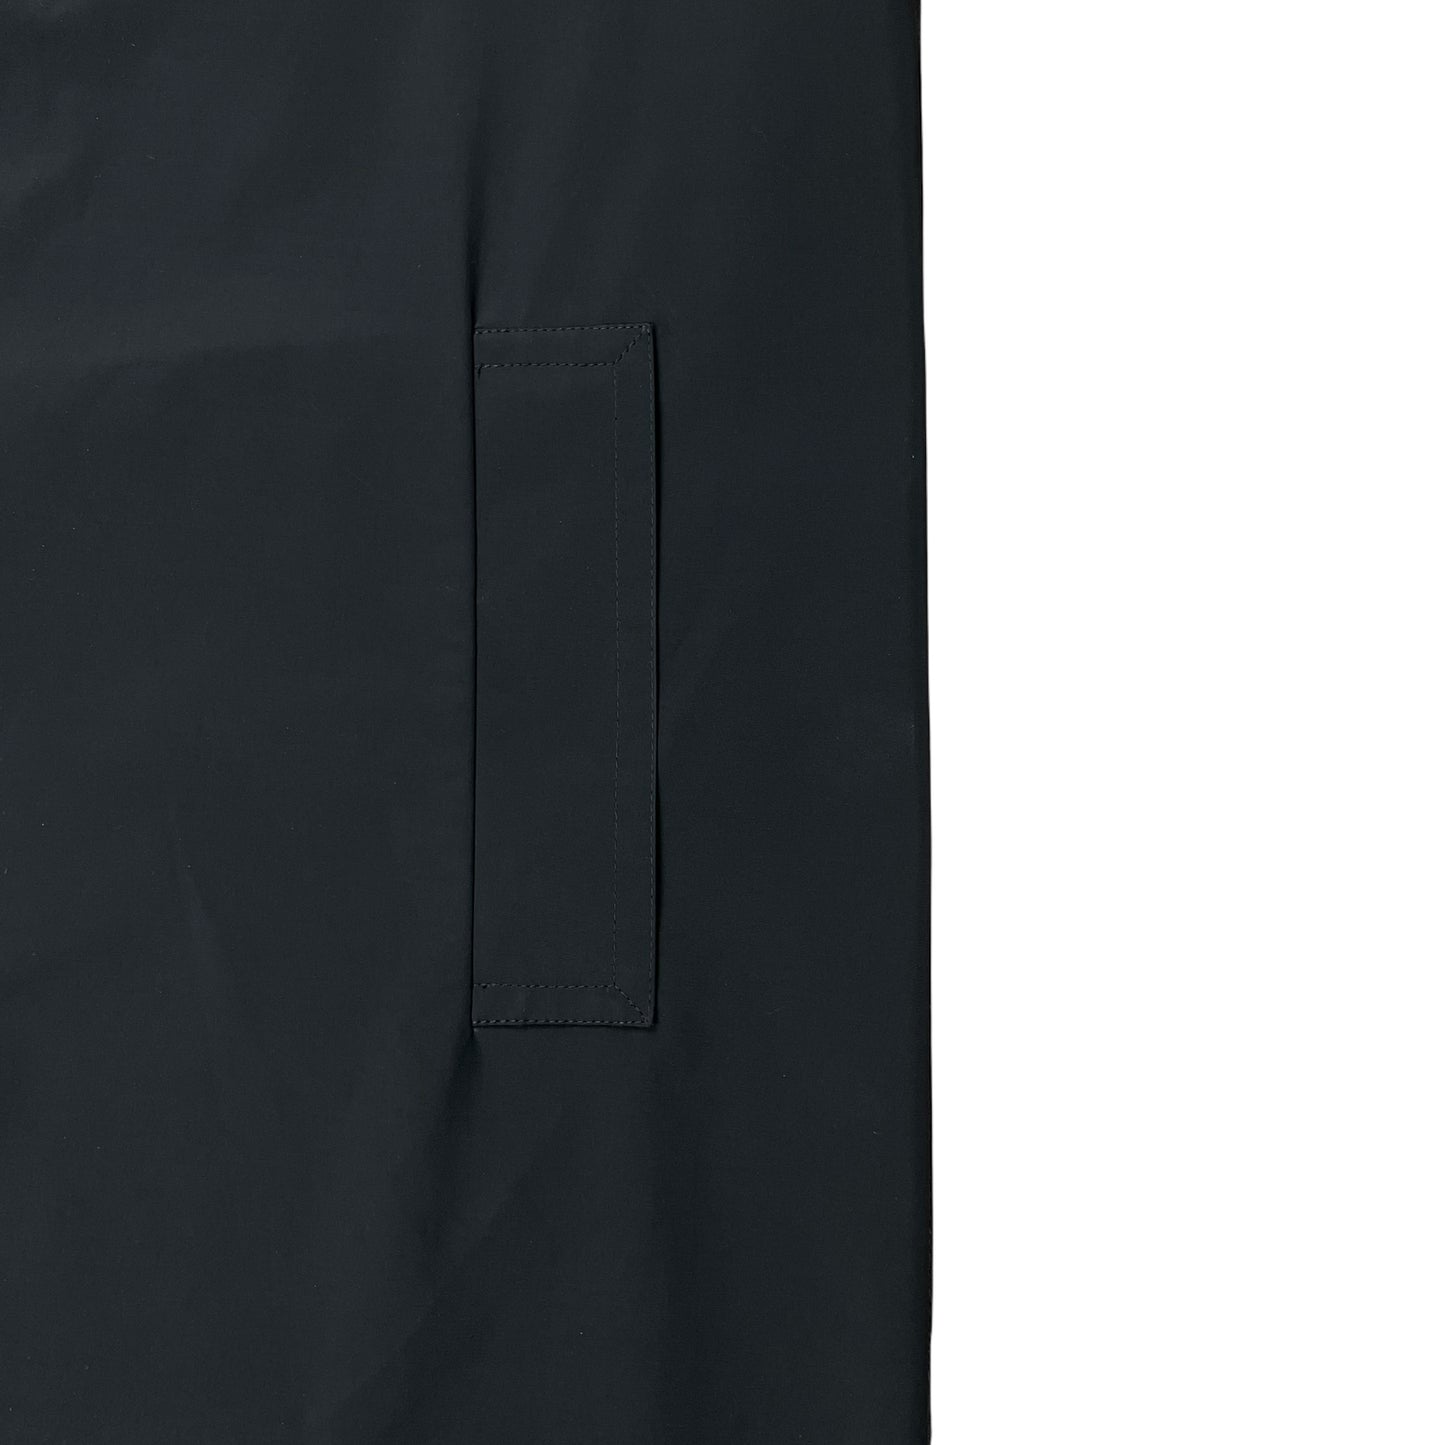 Mackintosh 0001 Black Hooded Trench Coat - AW17